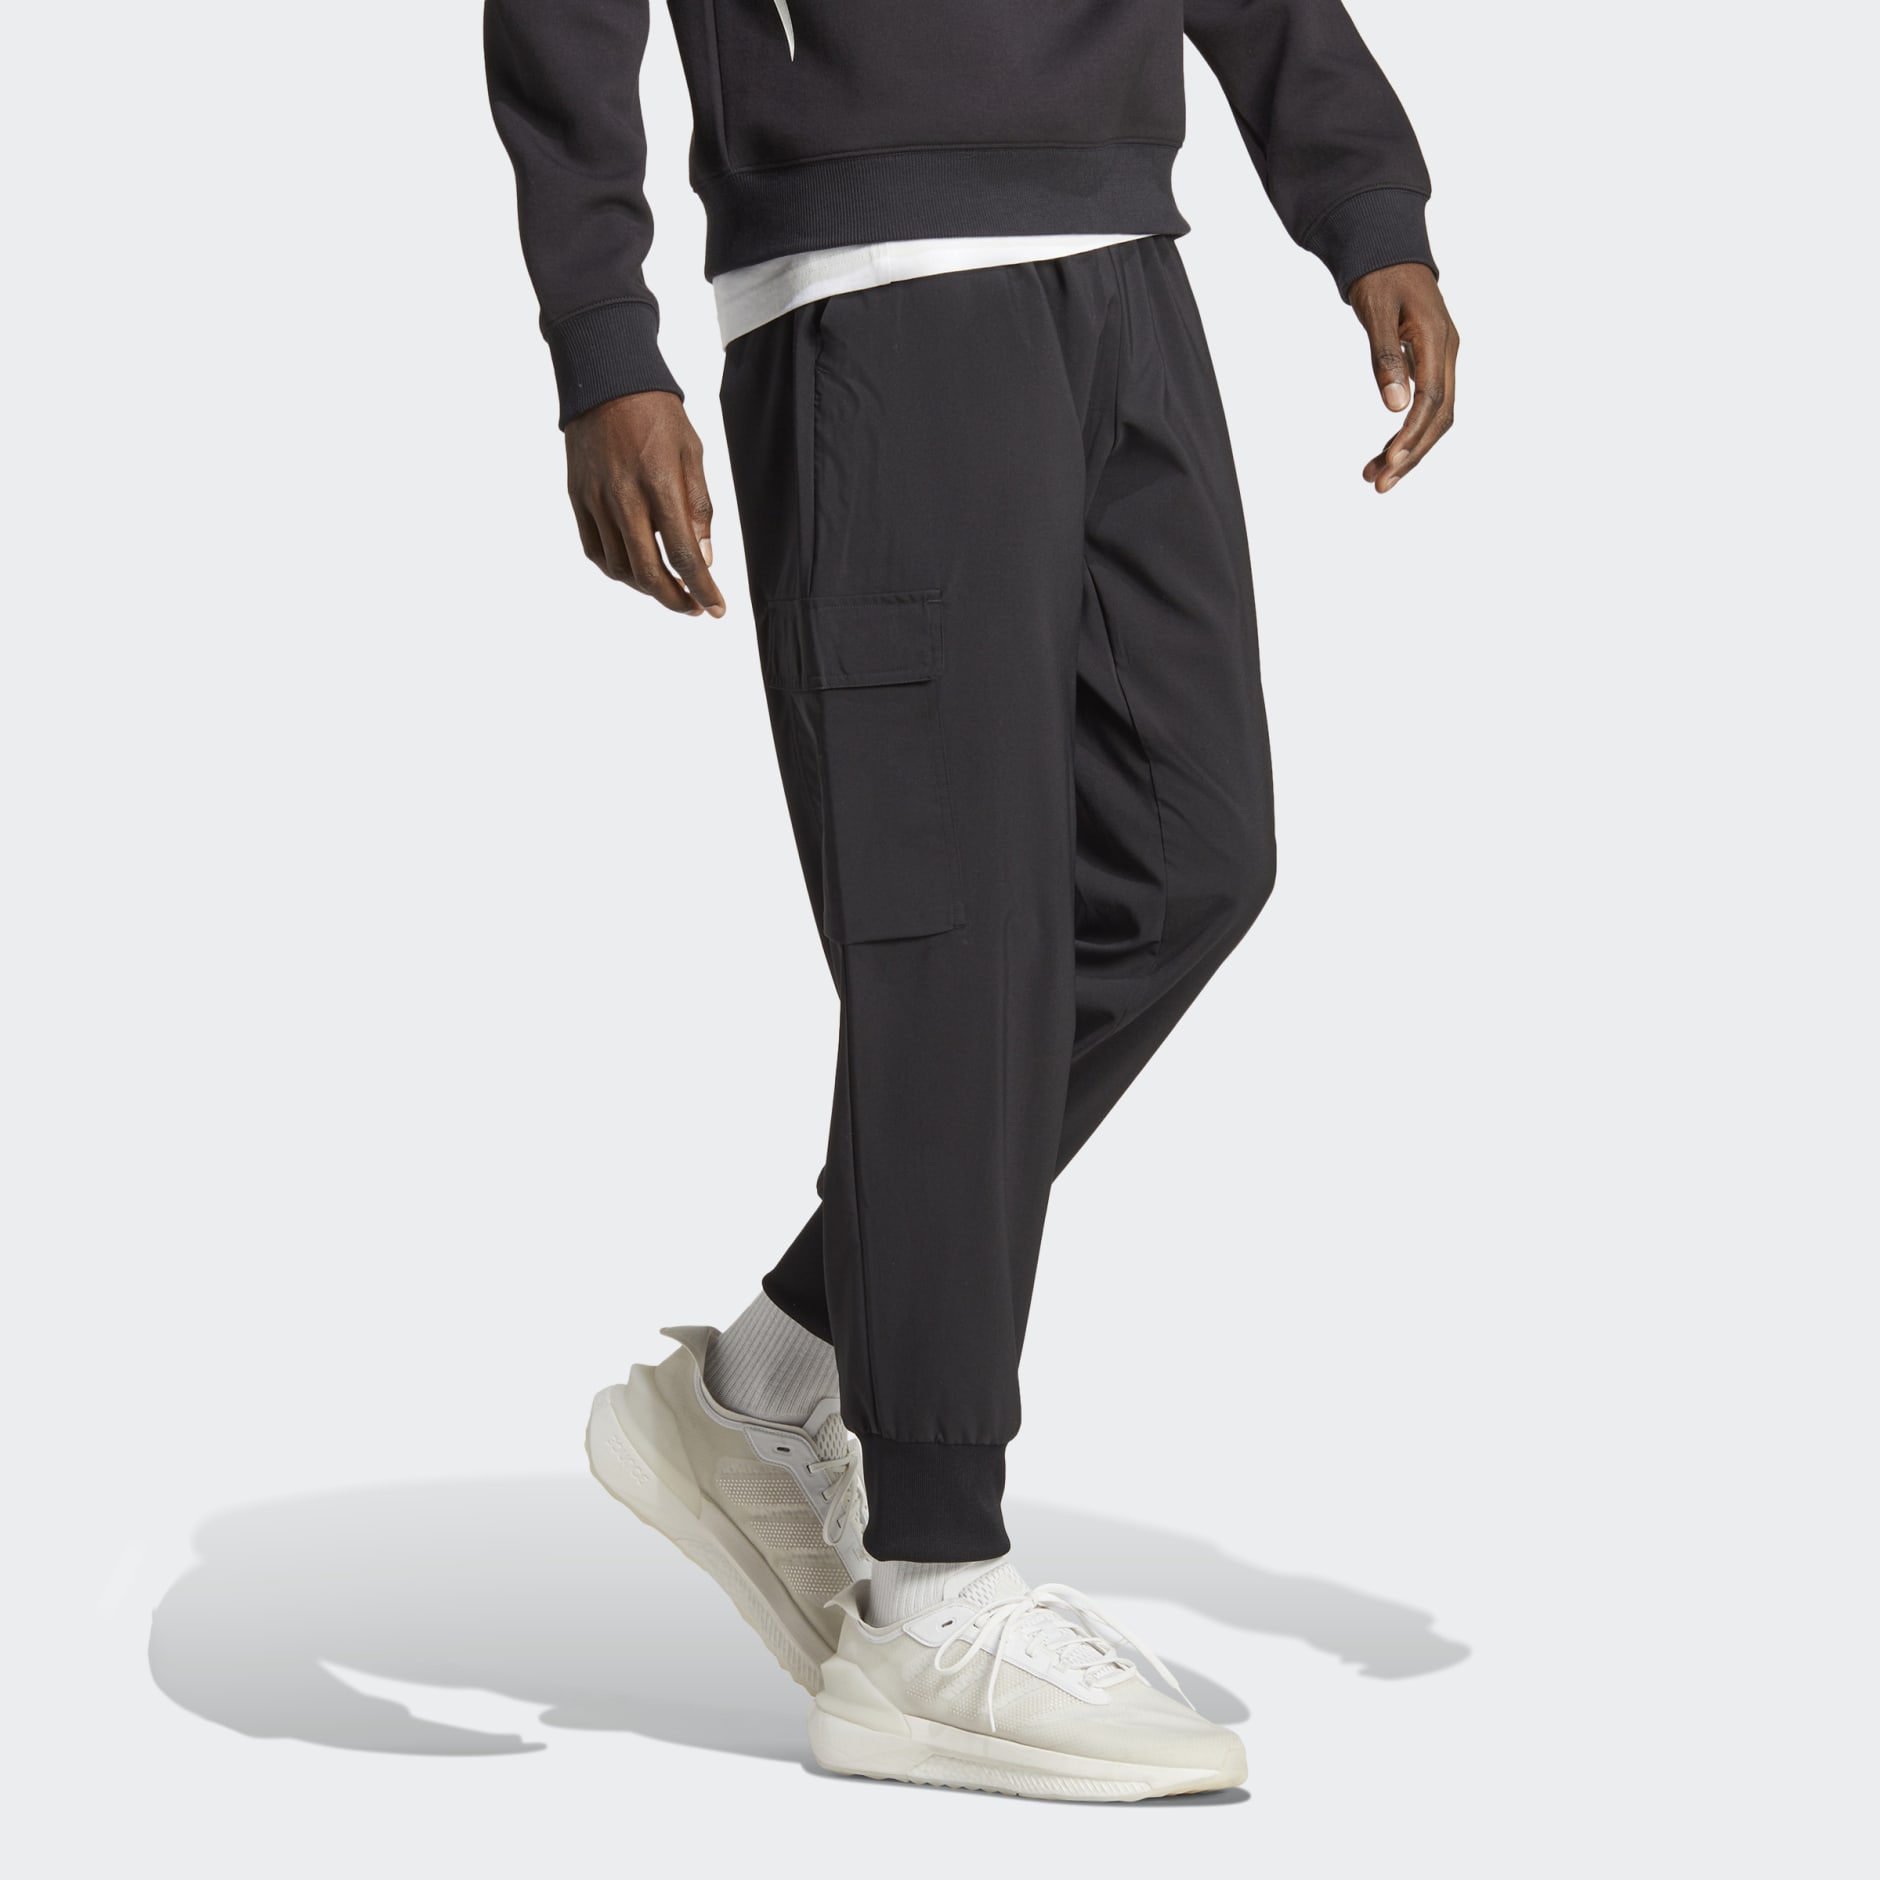 Black Nike Essential Woven Cargo Pants